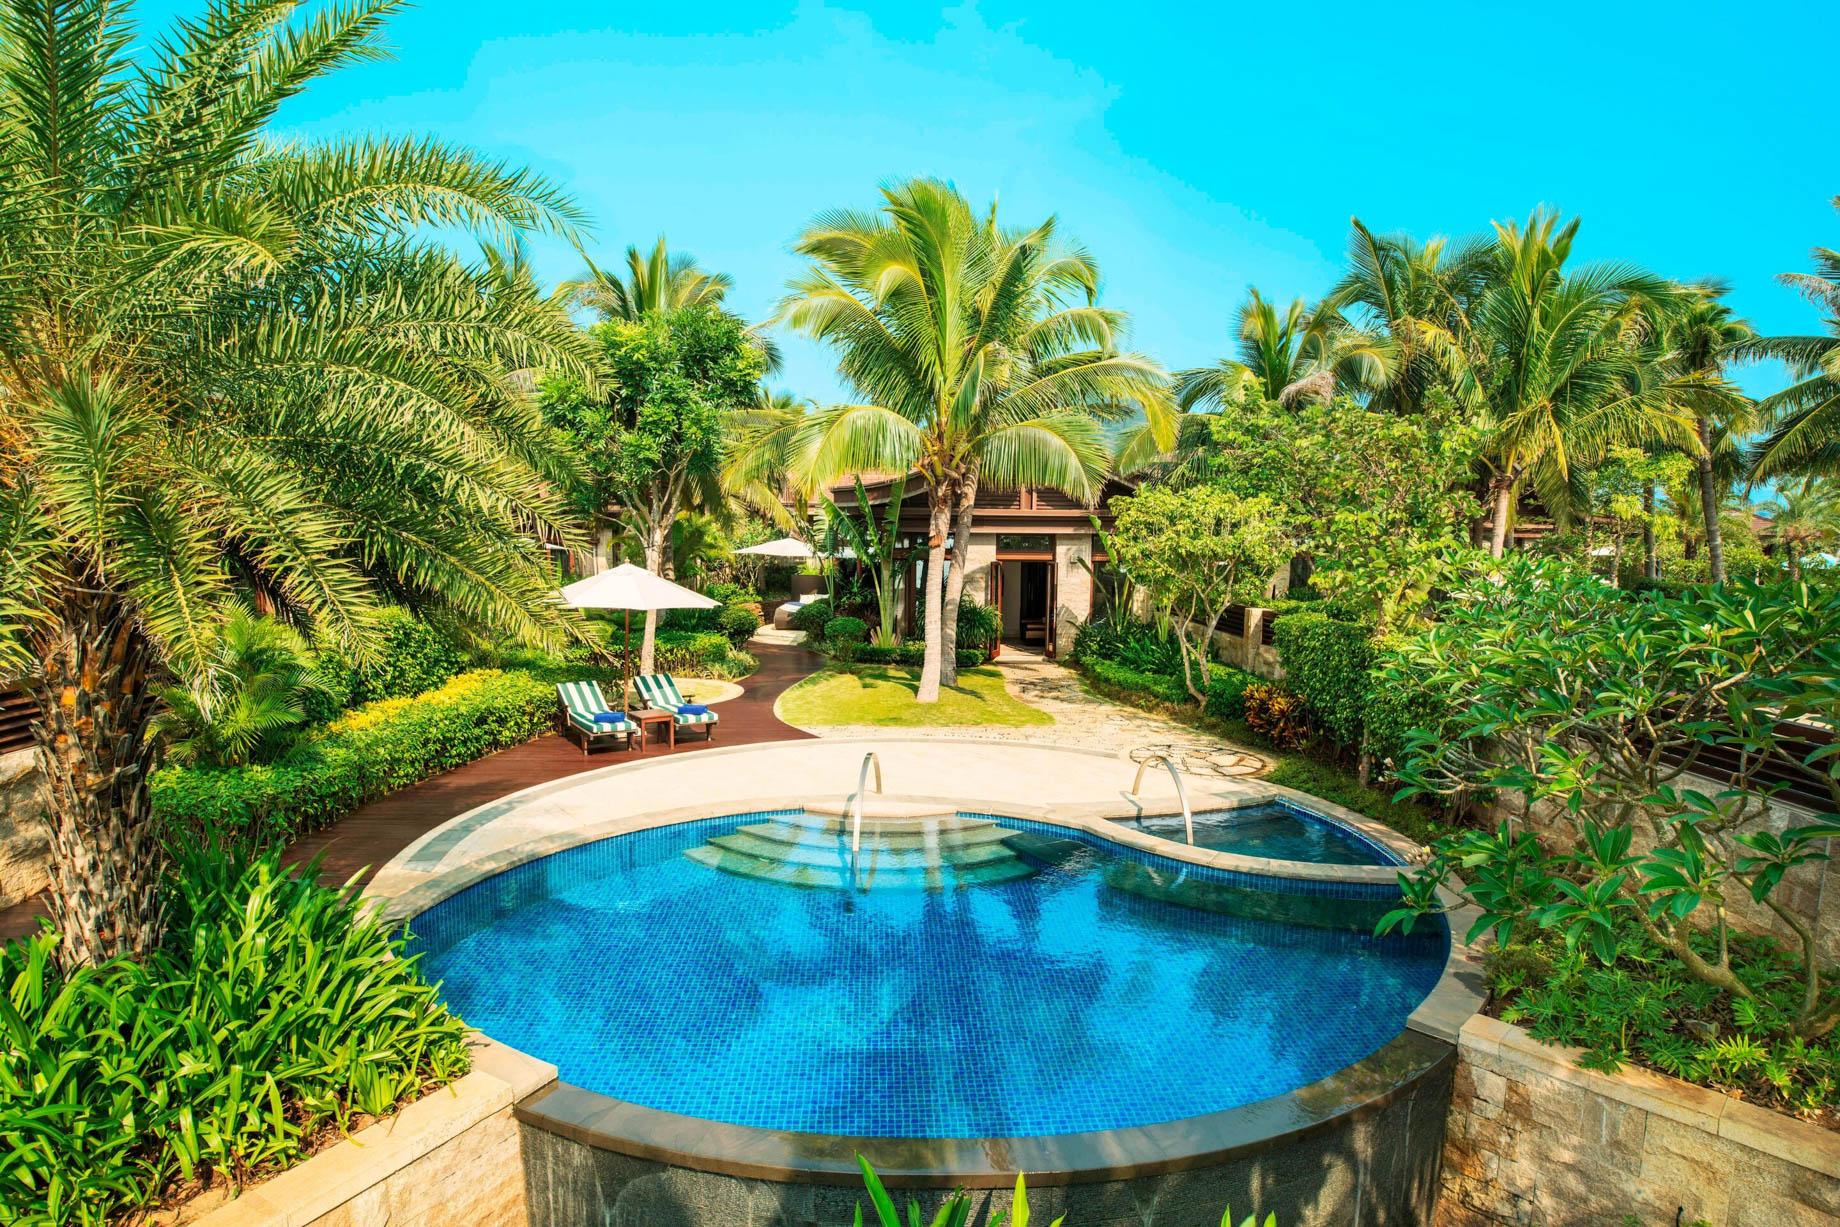 The St. Regis Sanya Yalong Bay Resort - Hainan, China - Seaside One Bedroom Villa Pool Aerial